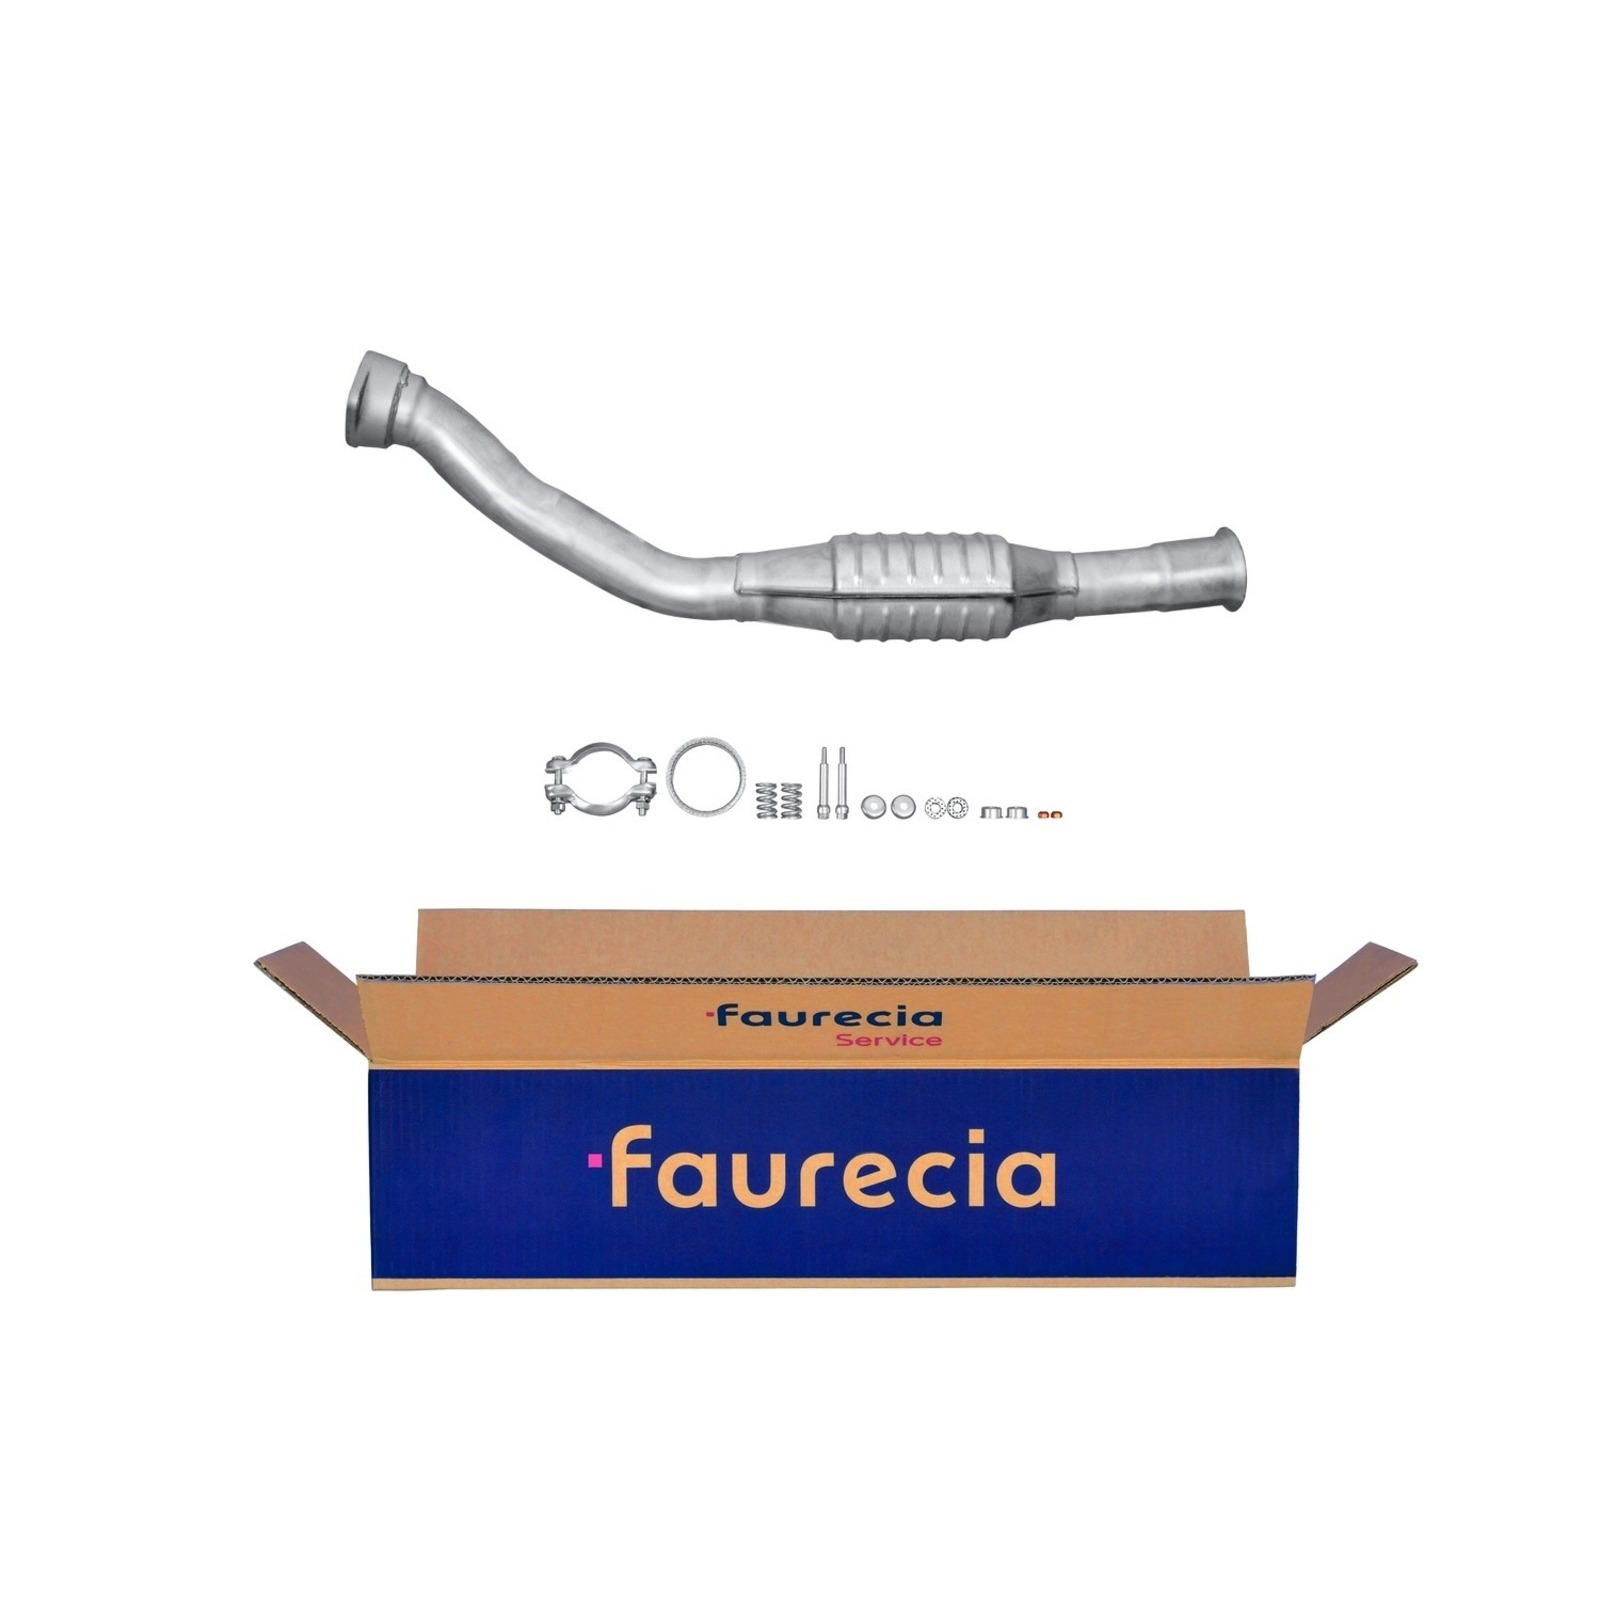 HELLA Katalysator Easy2Fit – PARTNERED with Faurecia